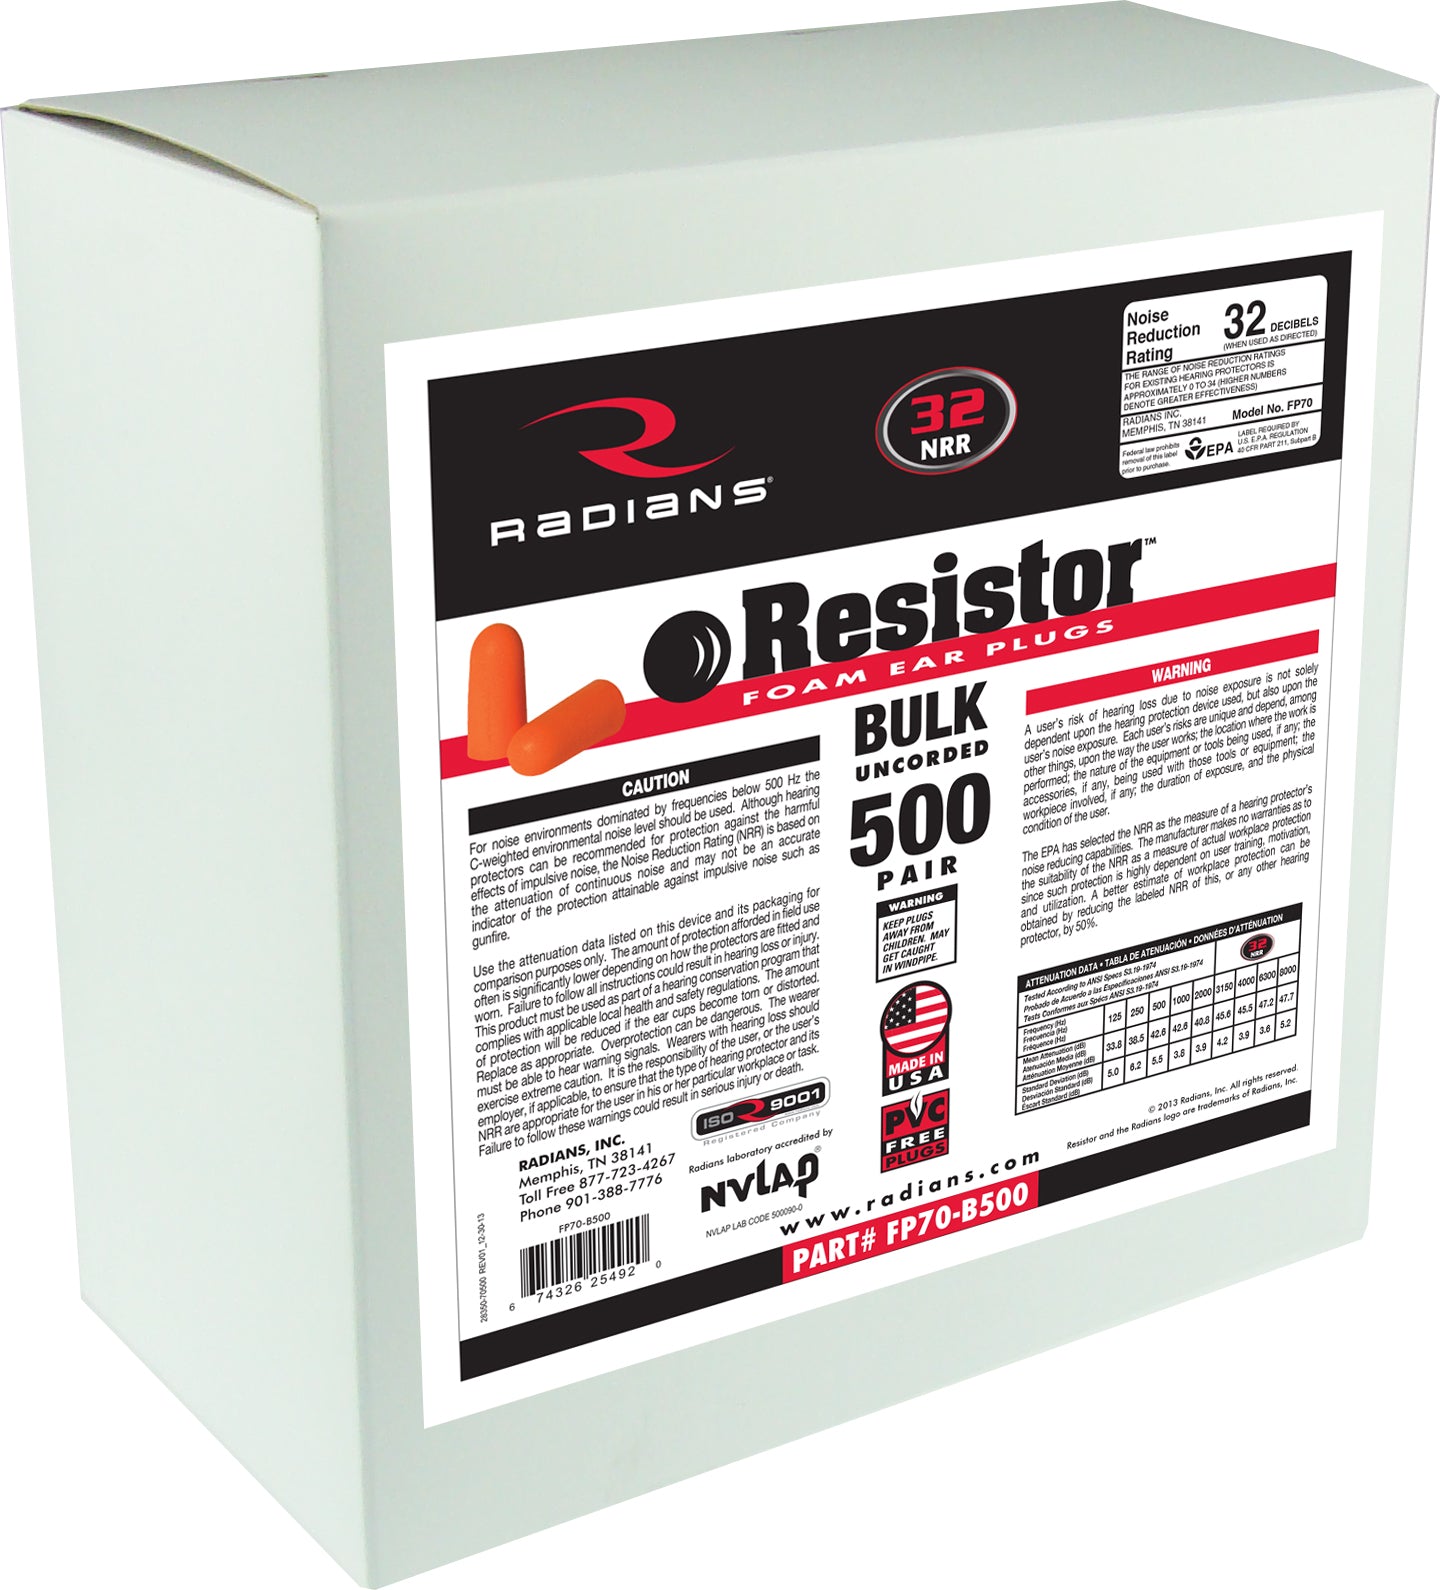 Radians Resistor® 32 Foam Earplug 500 Pair Dispenser Refill